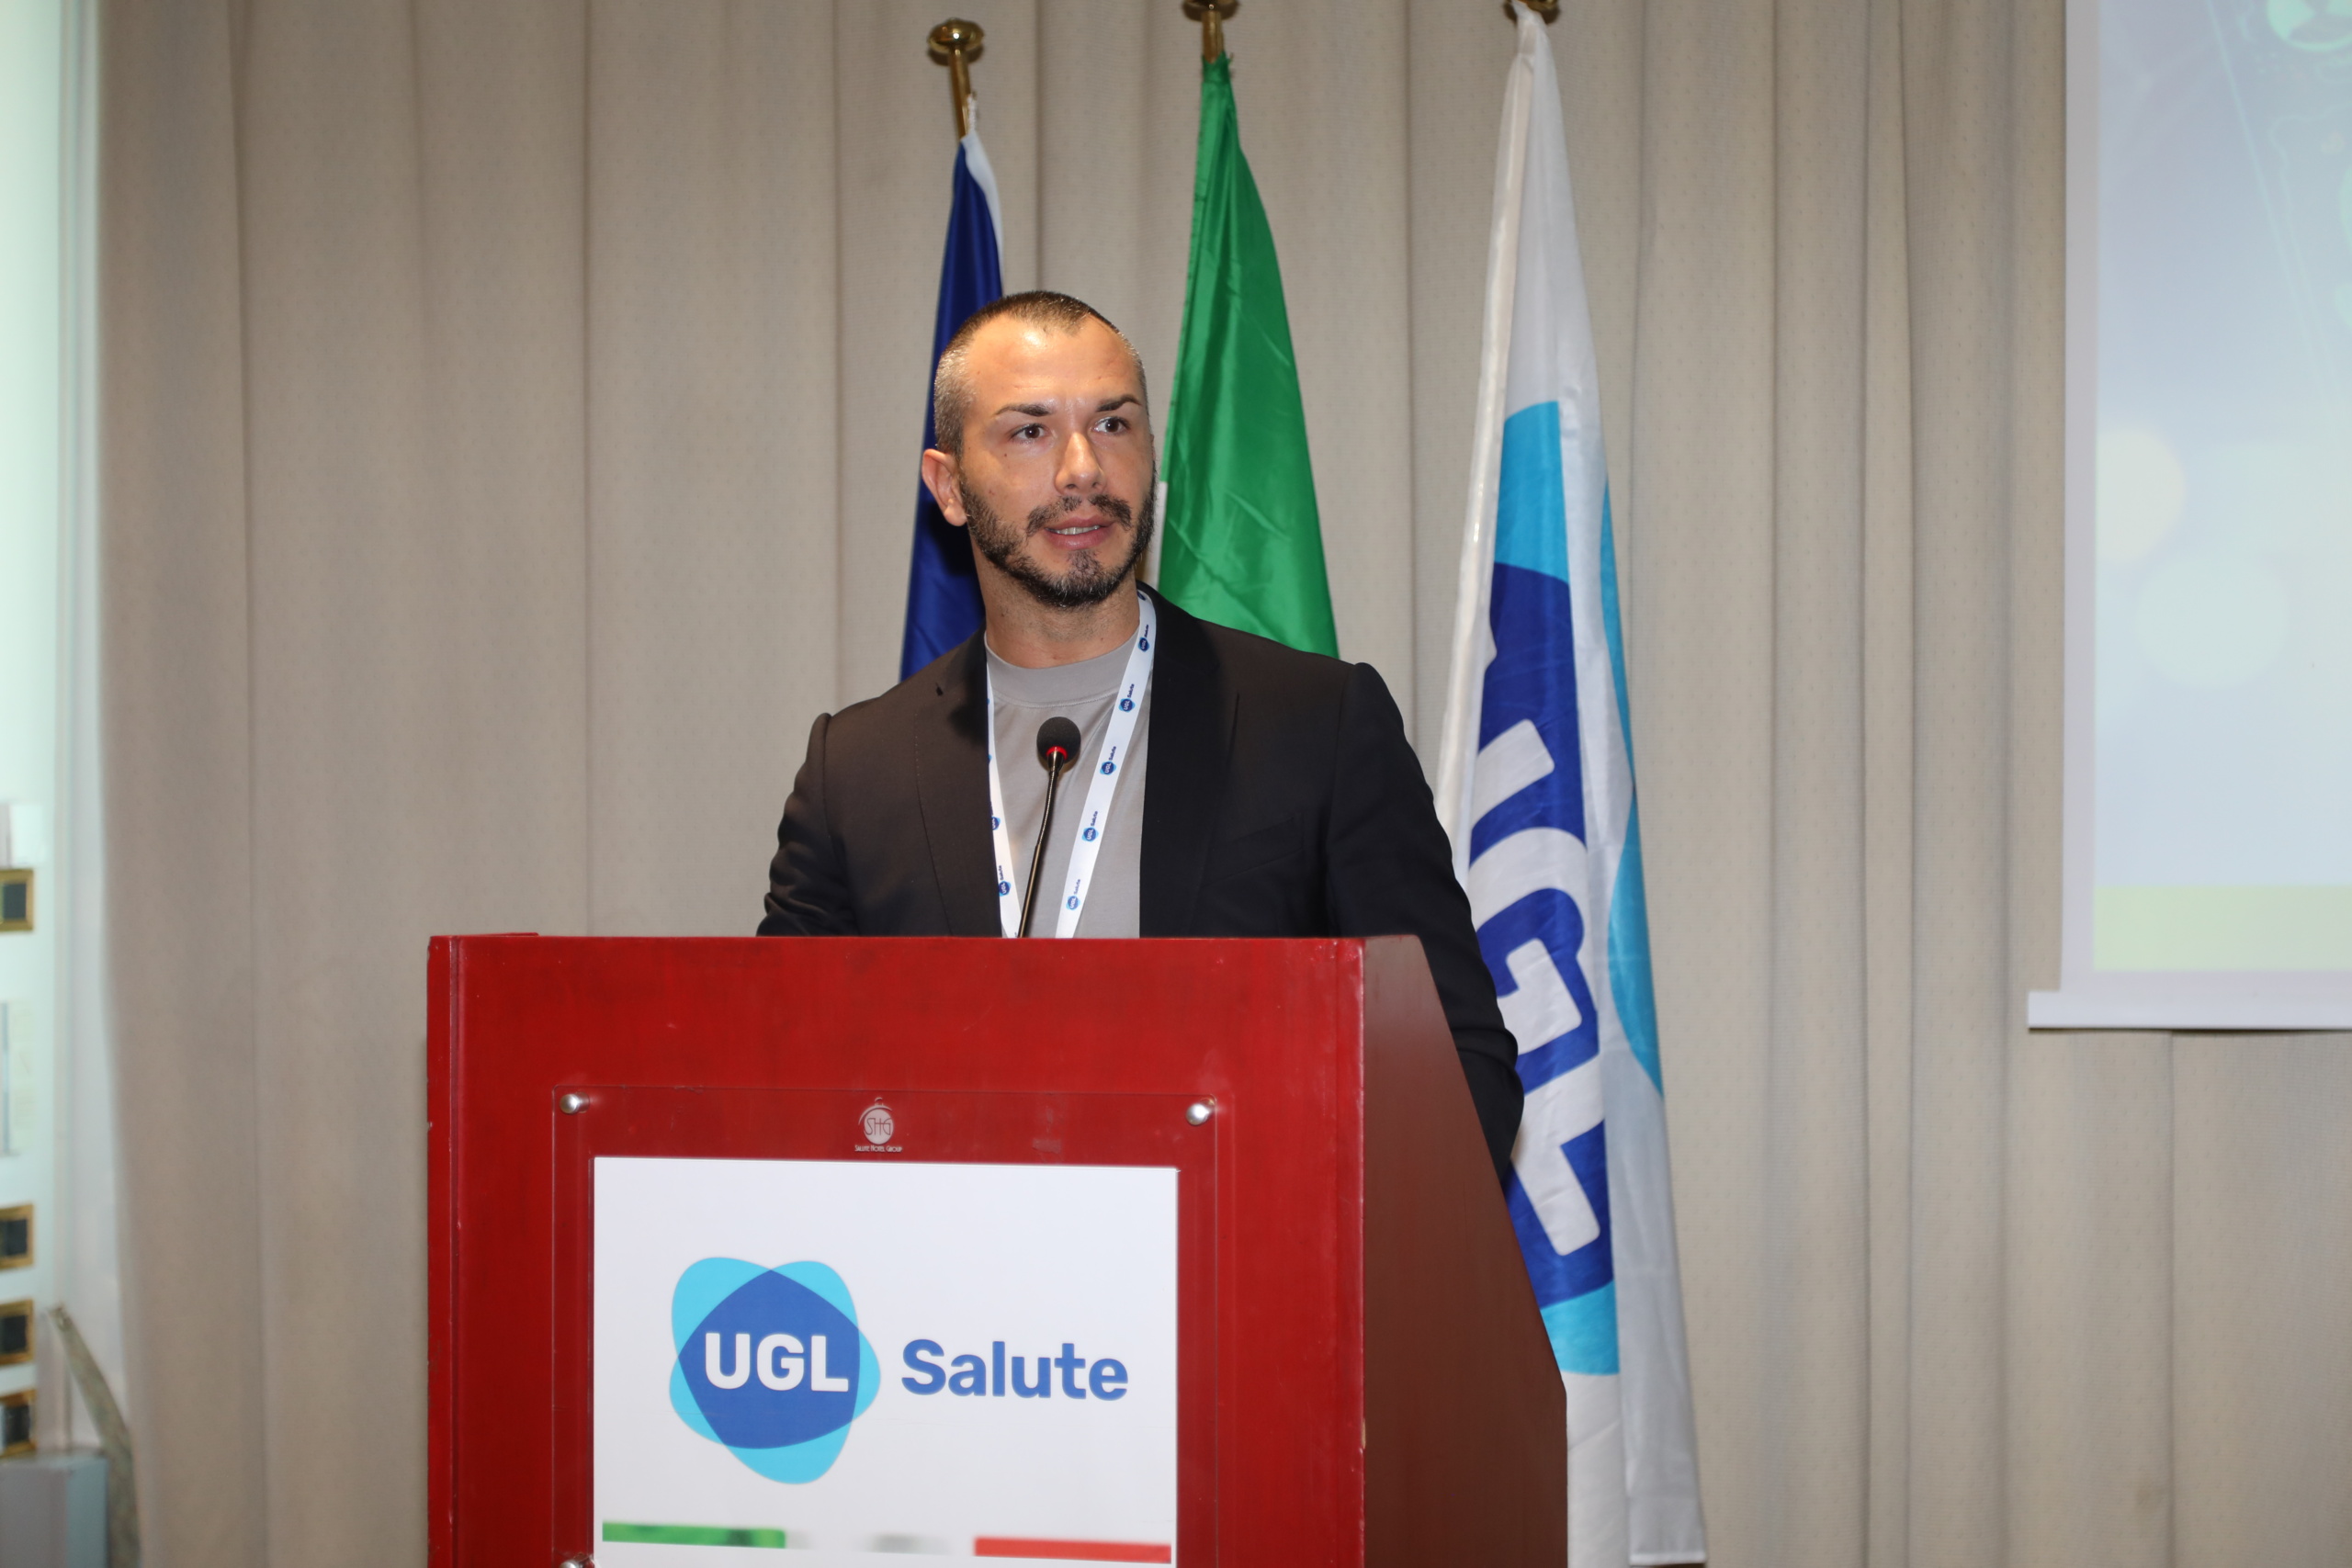 Galizia (UGL Salute): “ASL e Sanitaservice sconclusionate, ne risponda chi mal amministra”